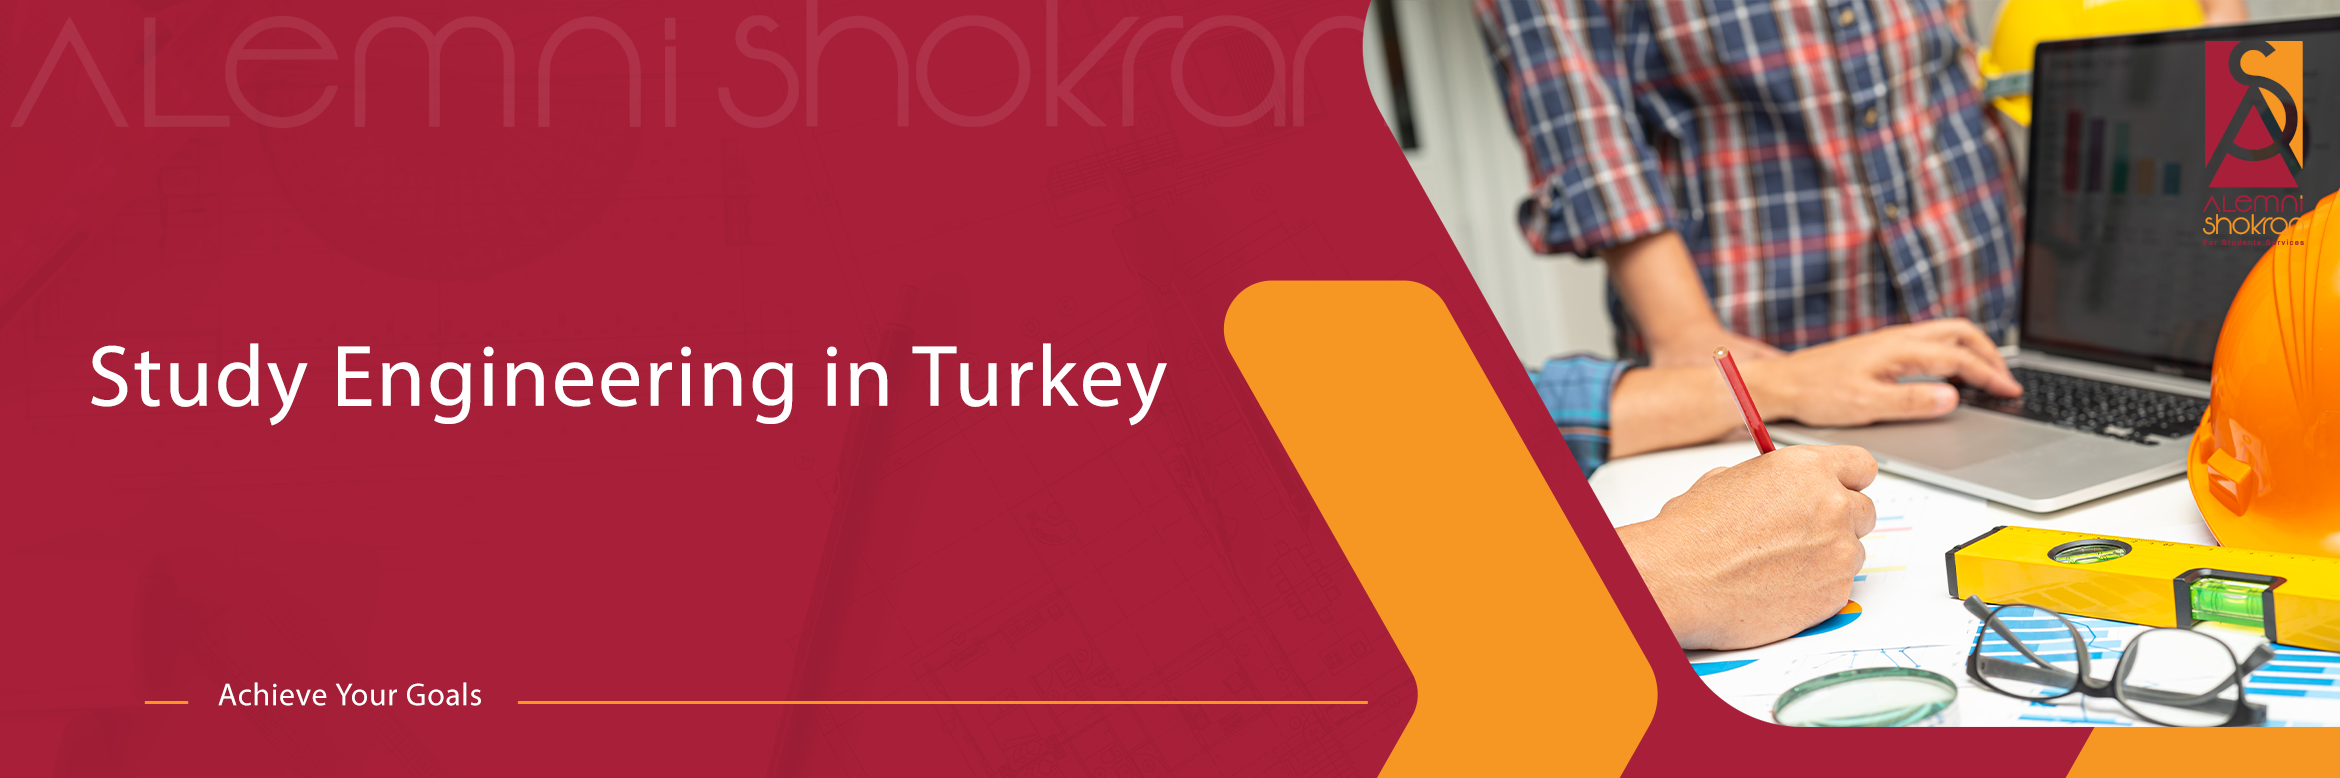 Study Engineering in Turkey